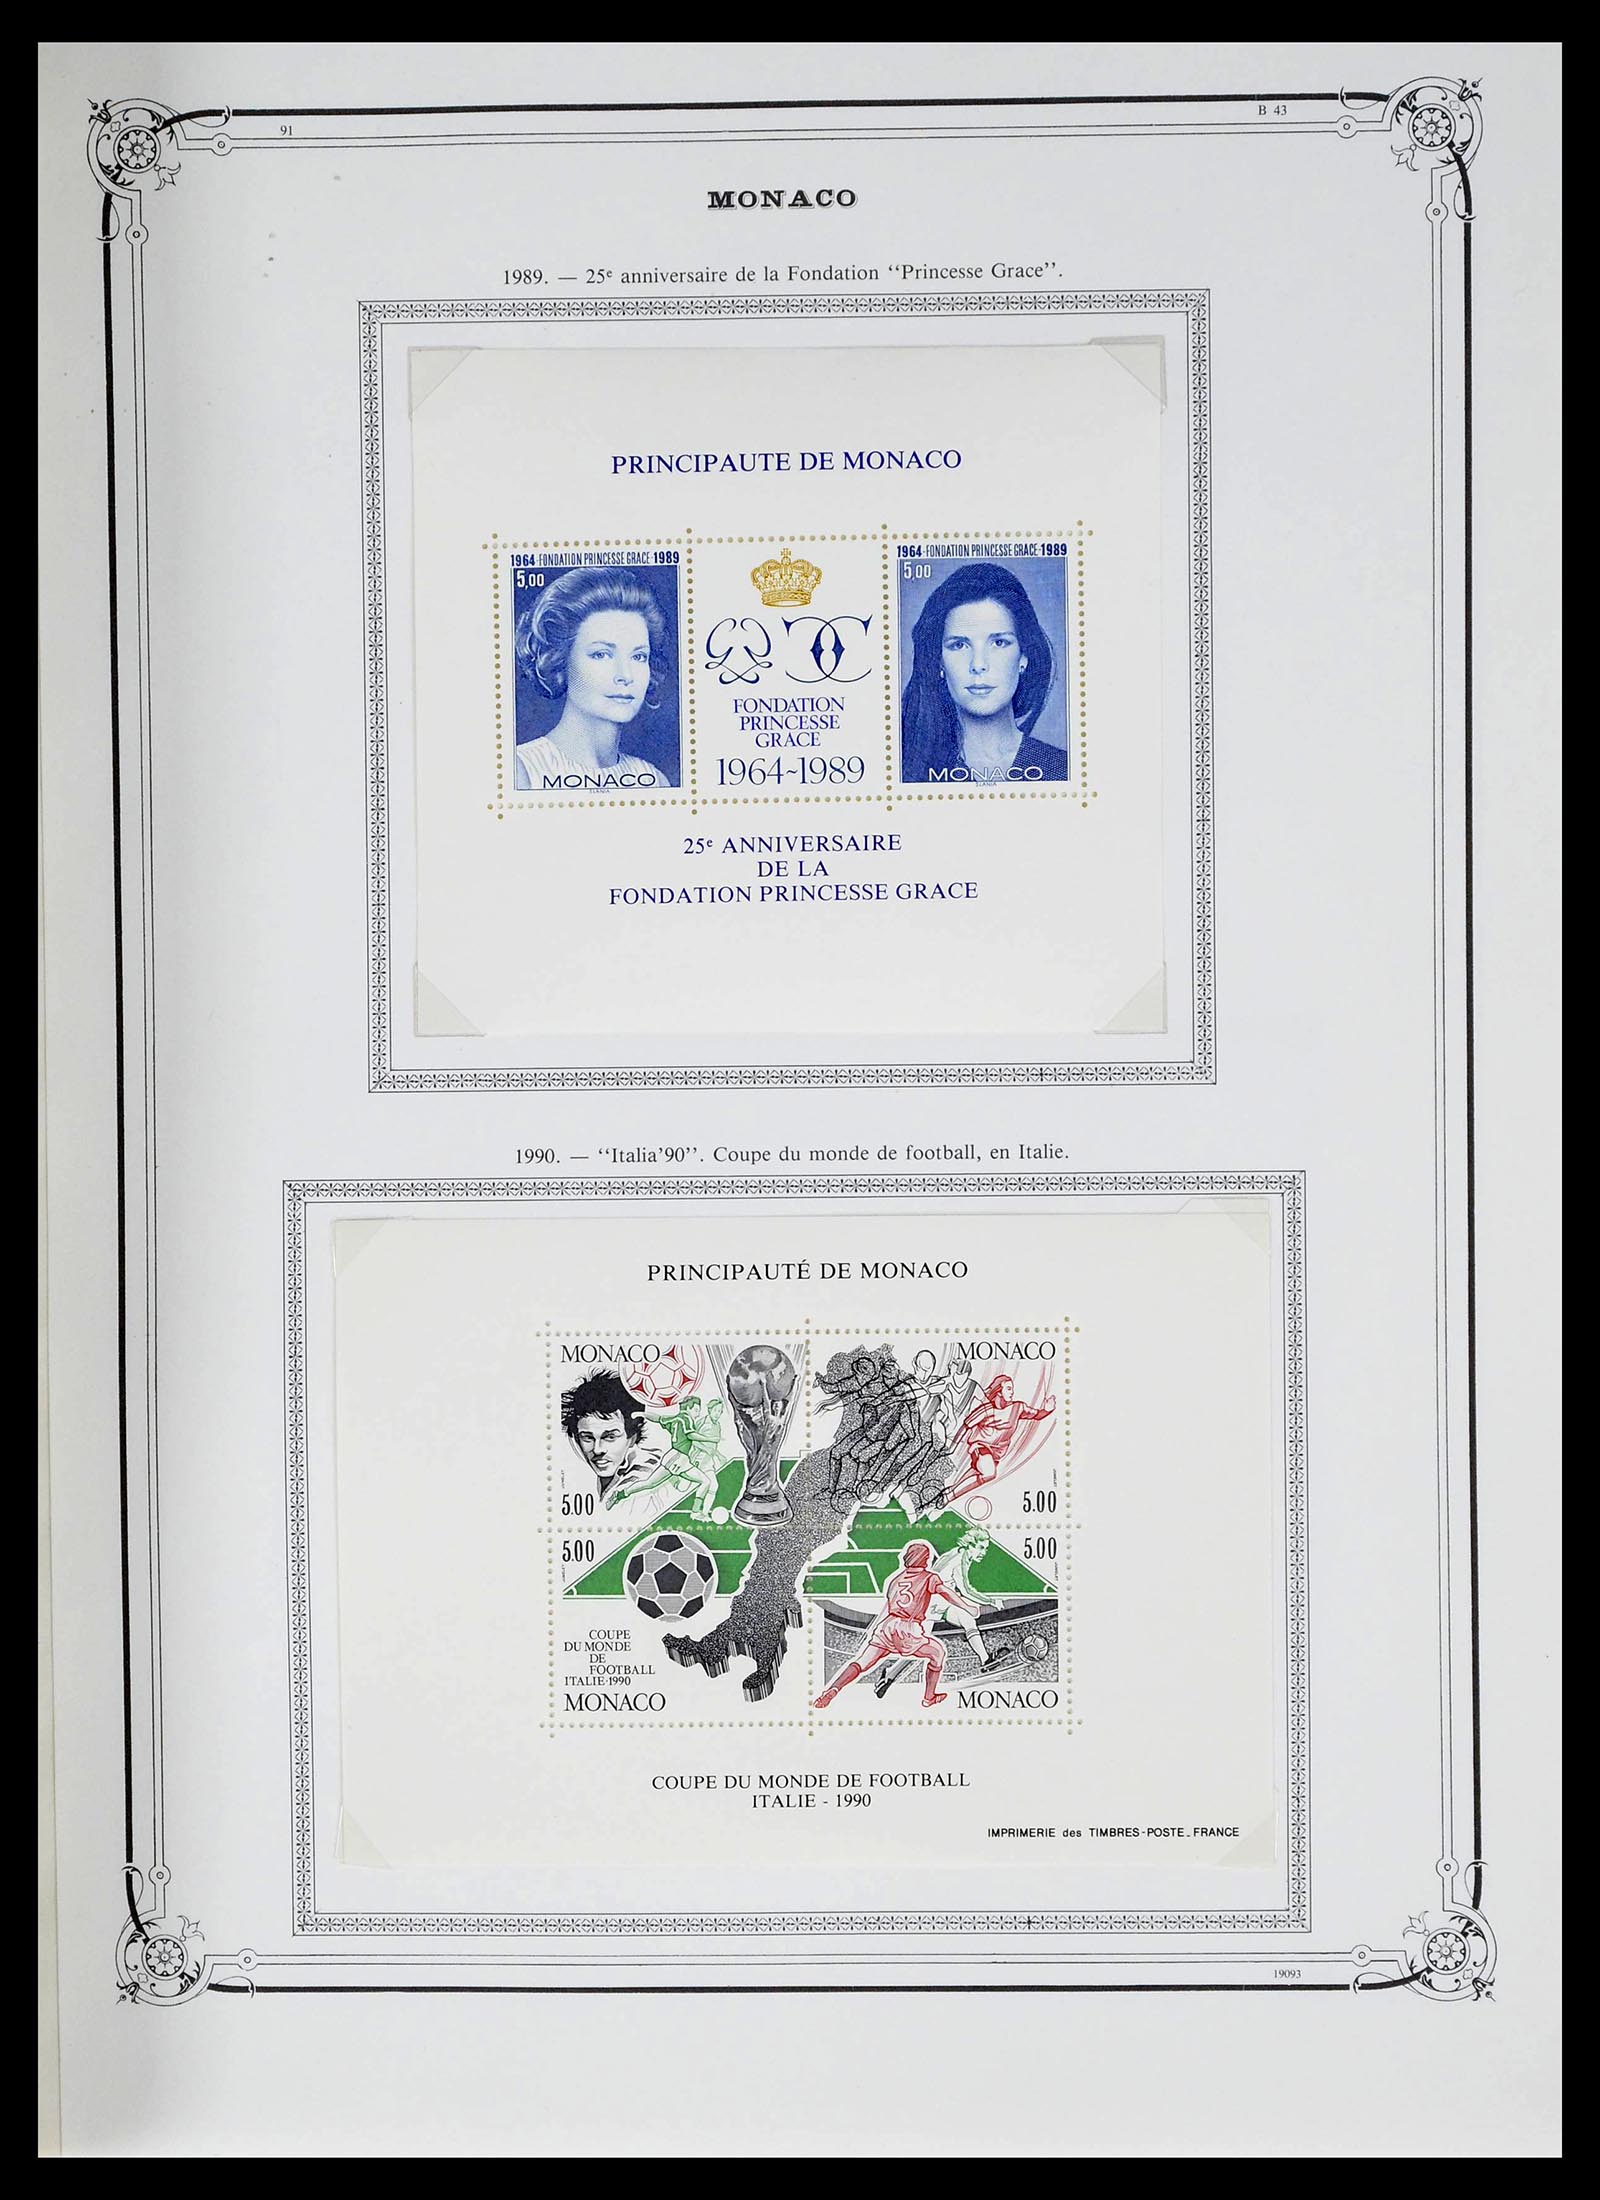 39133 0235 - Stamp collection 39133 Monaco 1885-1996.